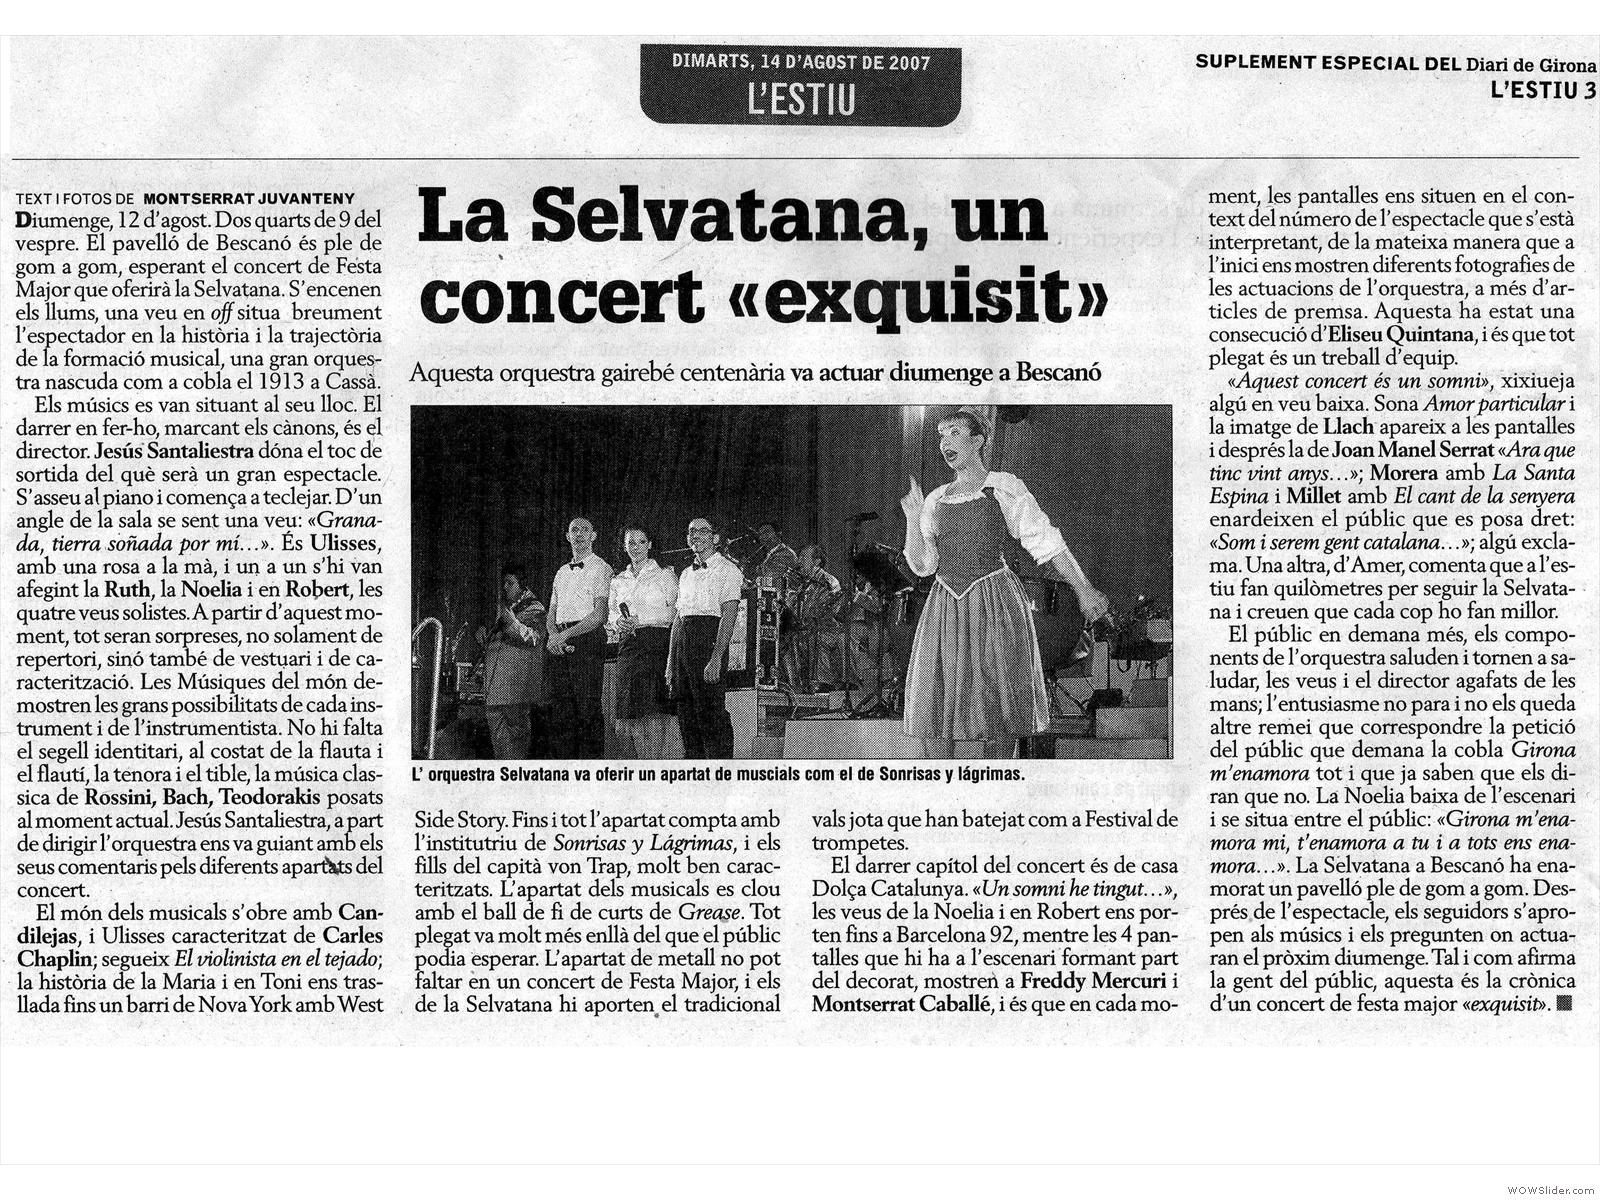 2007-08-14-Diari de Girona (suplement)-la Selvatana, un concert exquisit